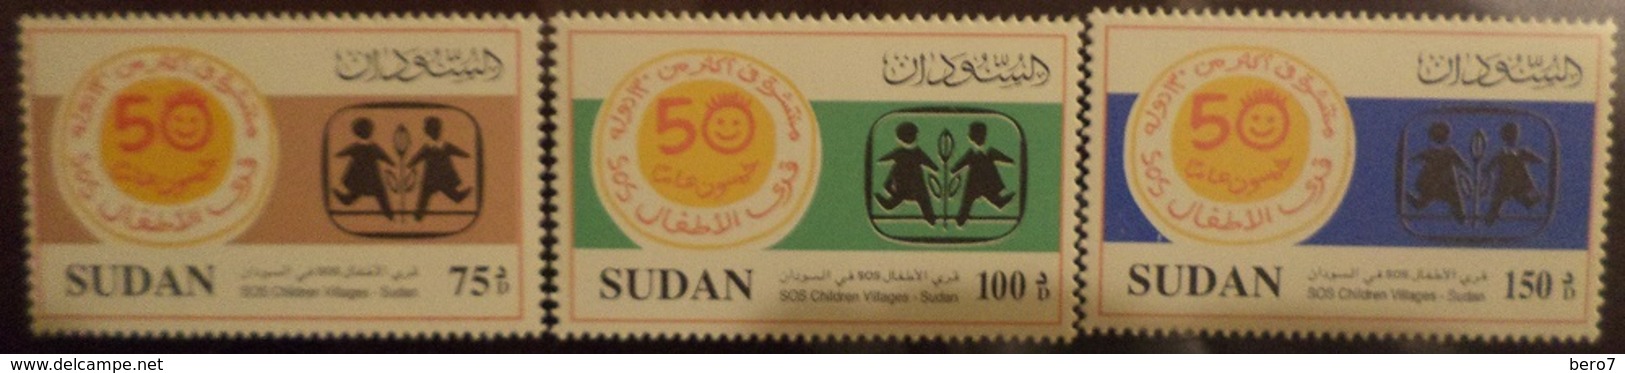 SUDAN - SOS Children's Villages, 50th Anniv. MNH - [1999] - Soudan (1954-...)